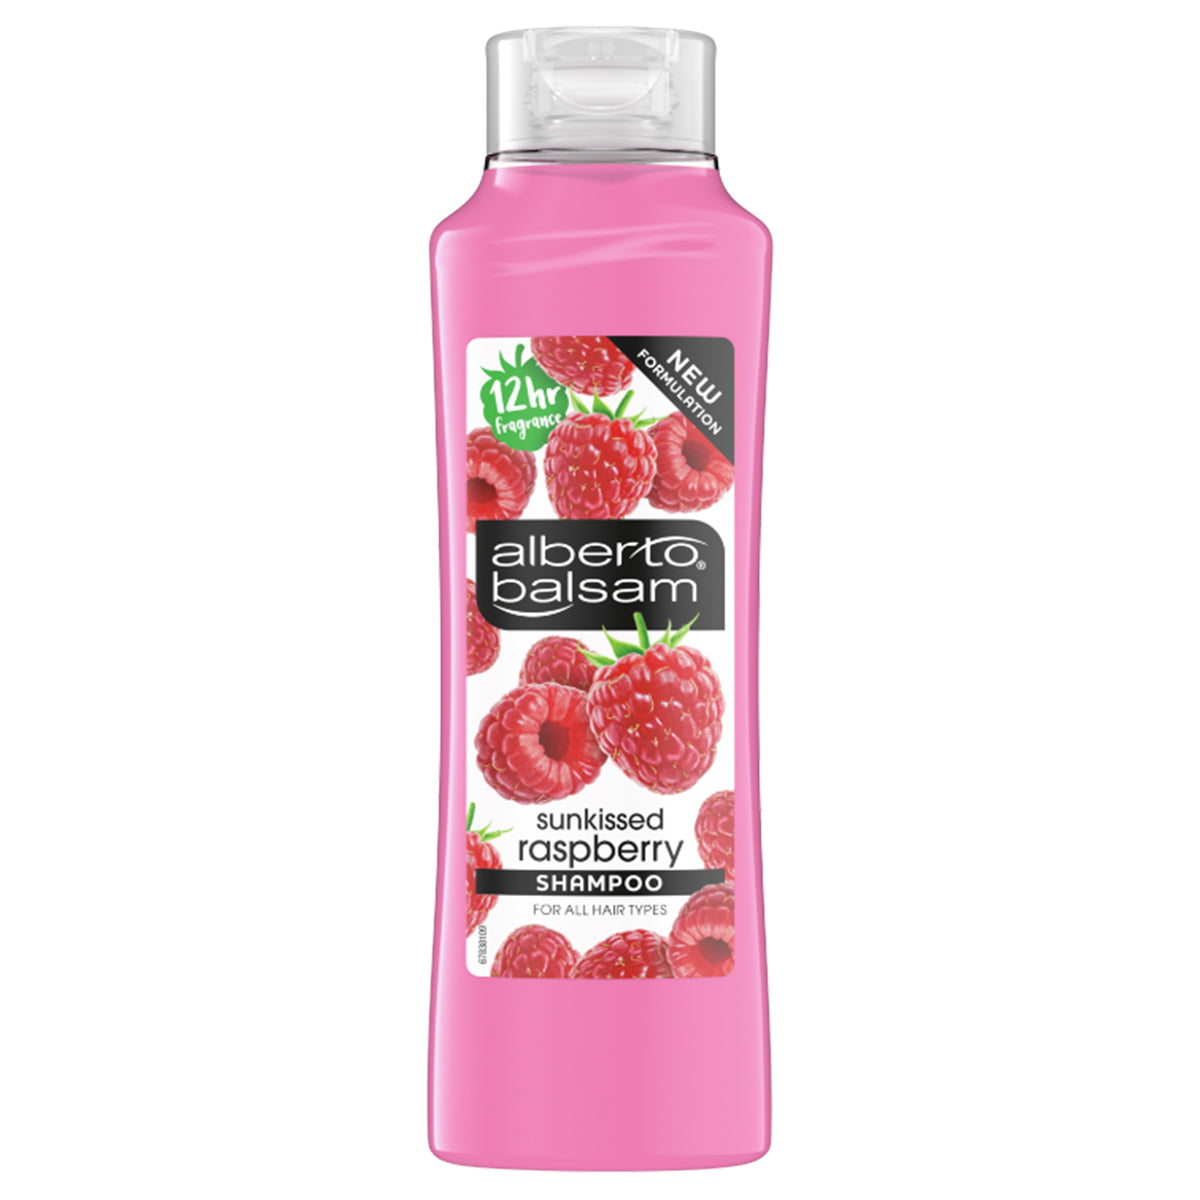 A bottle of Alberto Balsam - Raspberry Shampoo - 350ml on a white background.